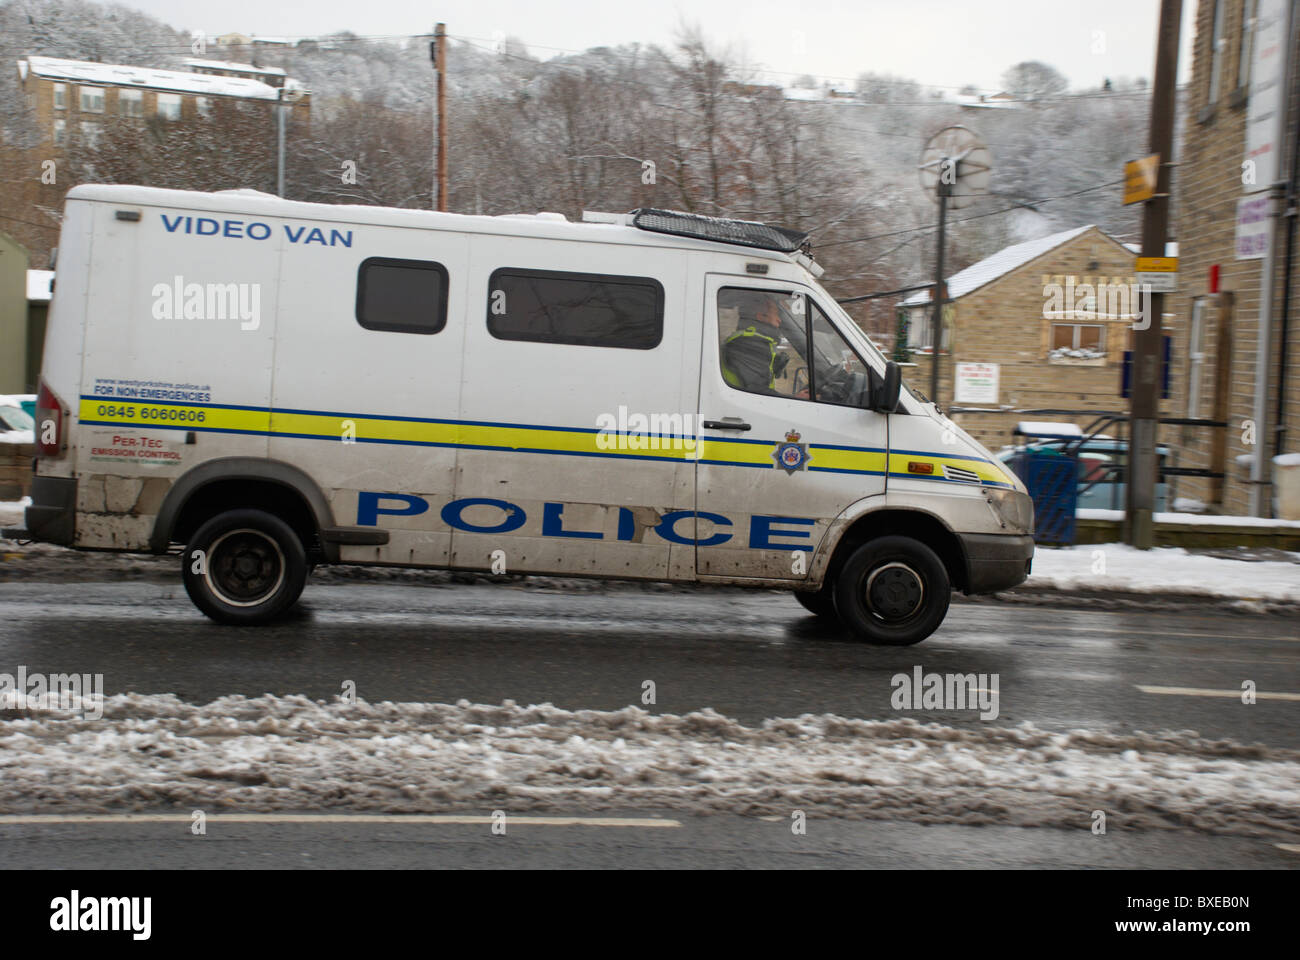 police video van in the snow Stock Photo